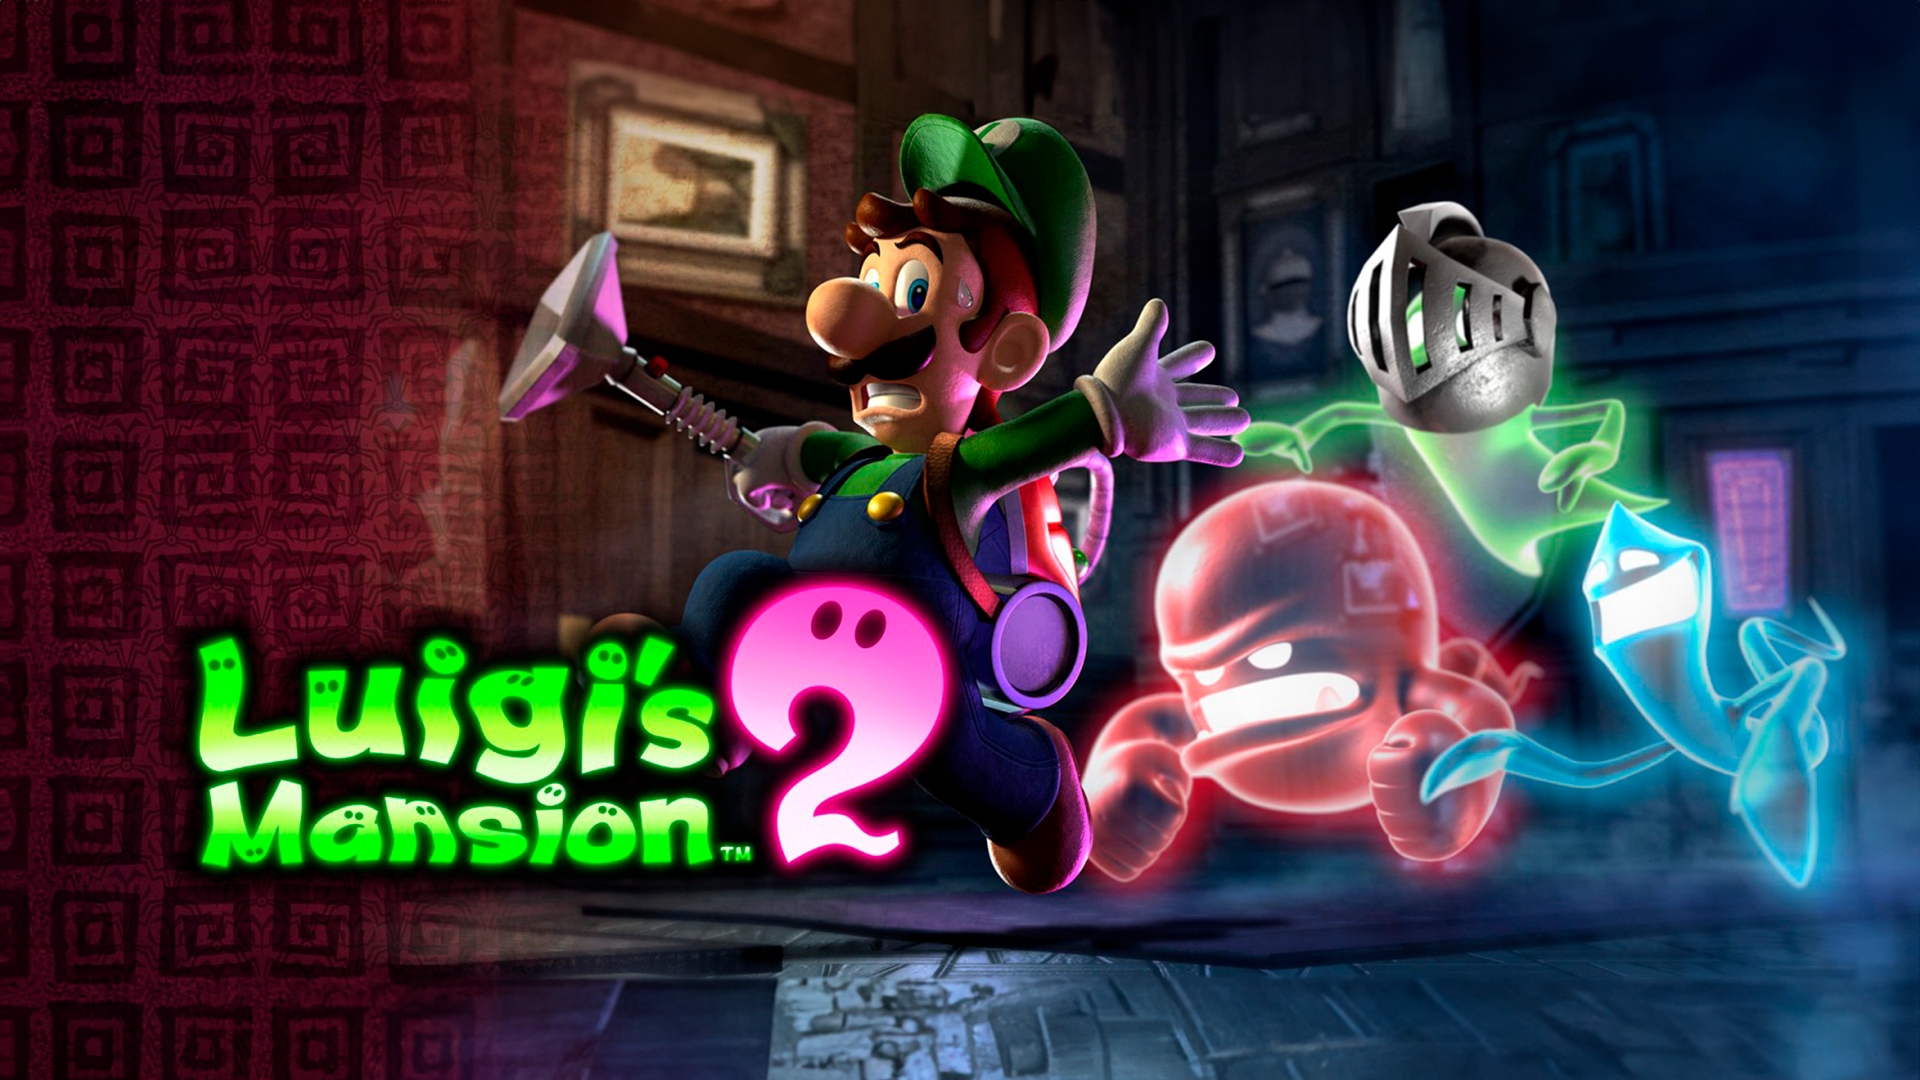 Nintendo luigi mansion. Luigi's Mansion Nintendo 3ds. Luigi's Mansion [3ds]. Luigi s Mansion 3ds. Luigi's Mansion 2 (3ds).